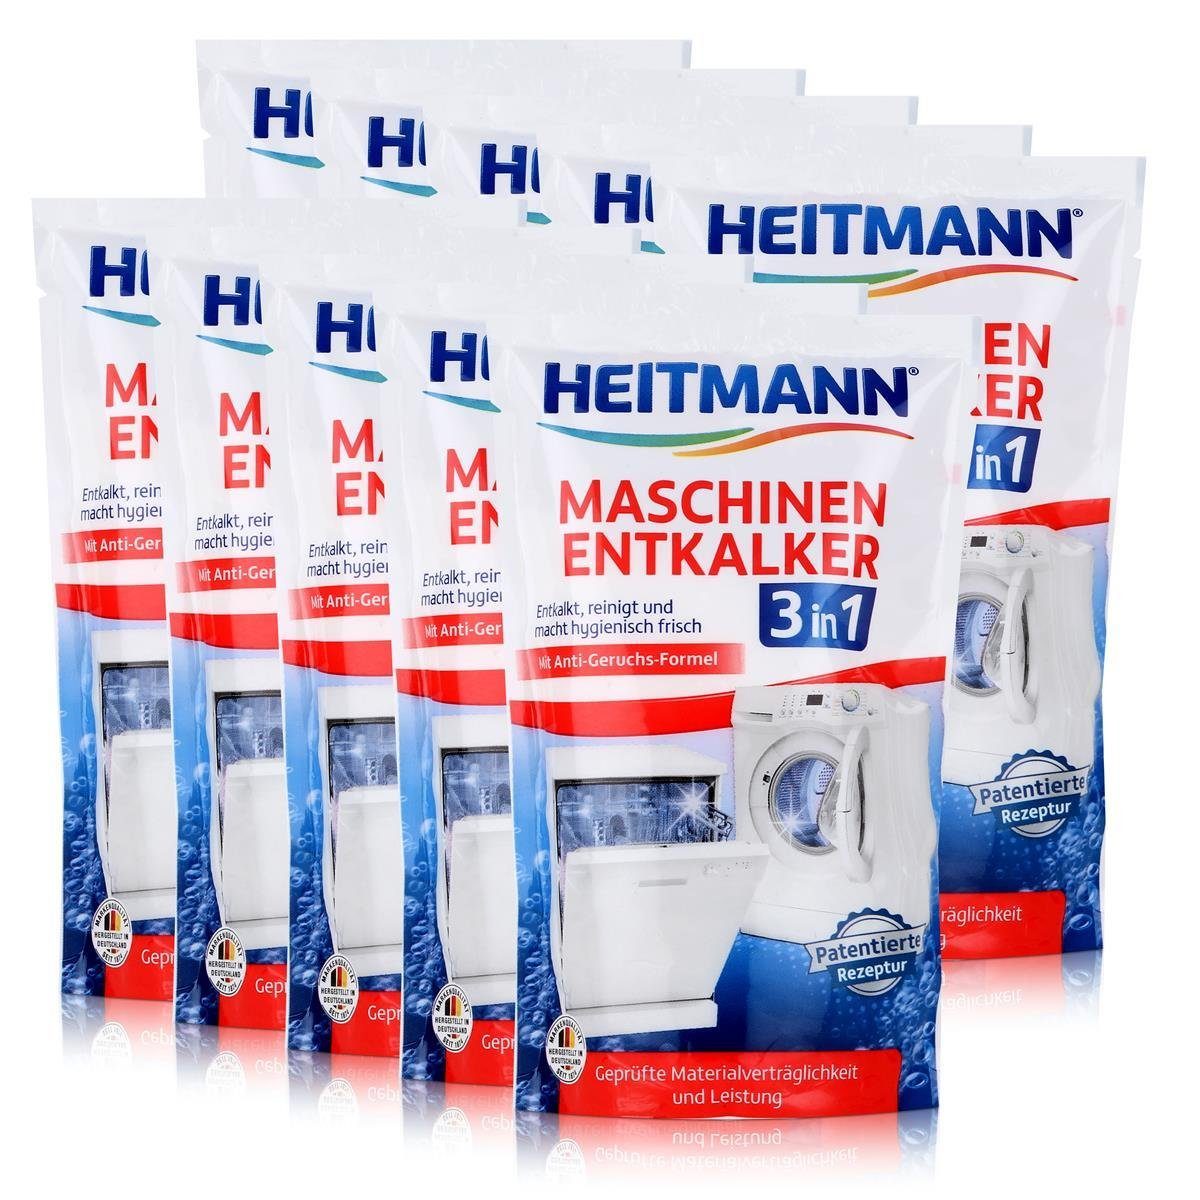 HEITMANN Heitmann Maschinen Entkalker 175g -Waschmaschinen und Geschirrspüler (Spezialwaschmittel